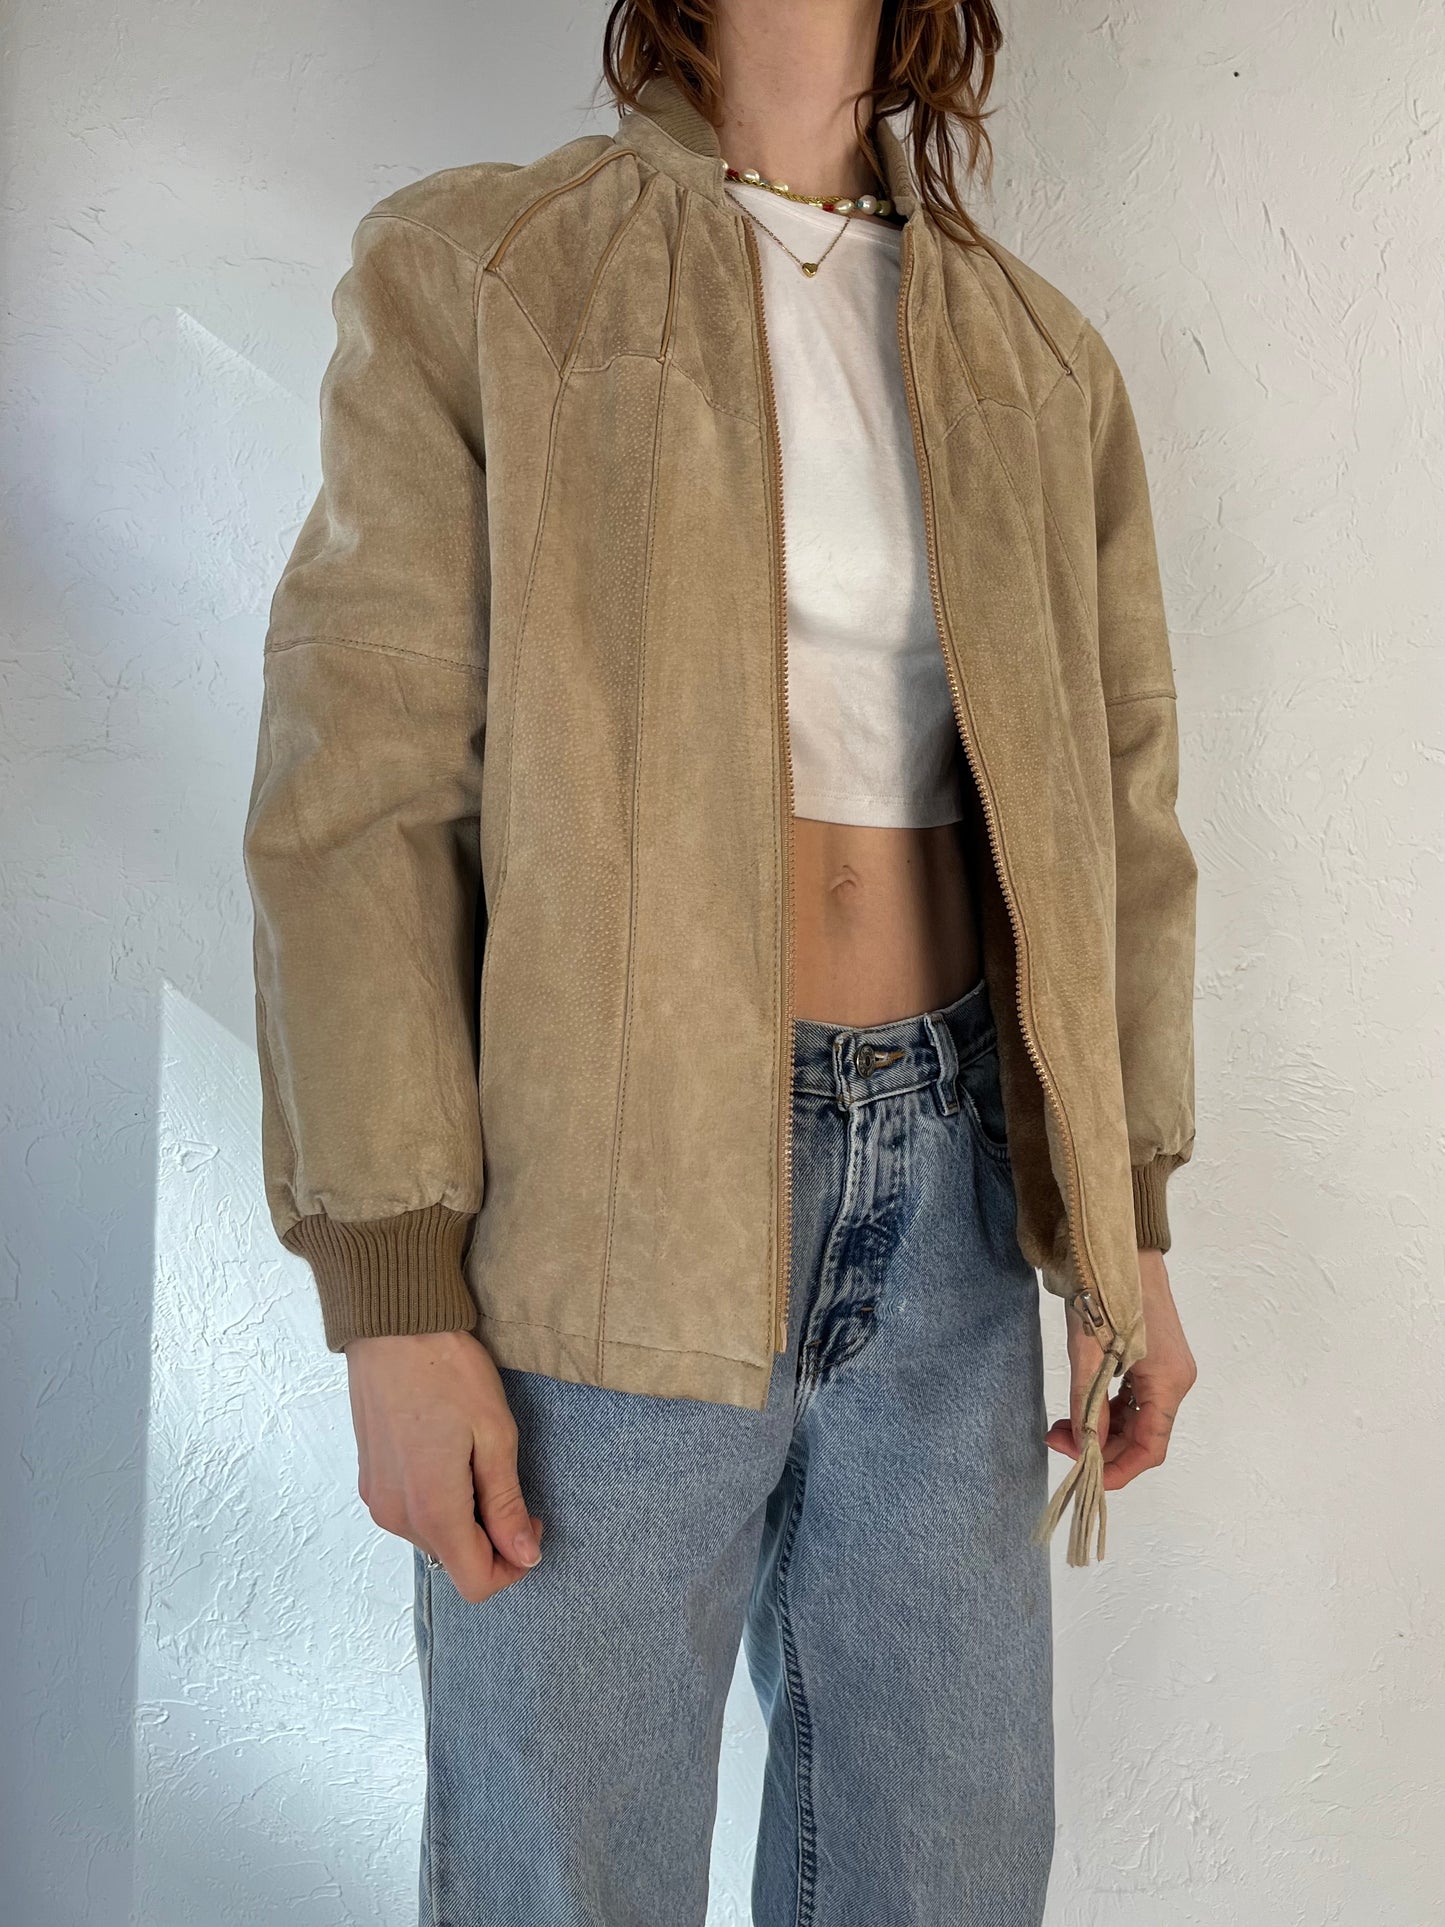 80s 'Karizma' Beige Suede Leather Jacket / Medium